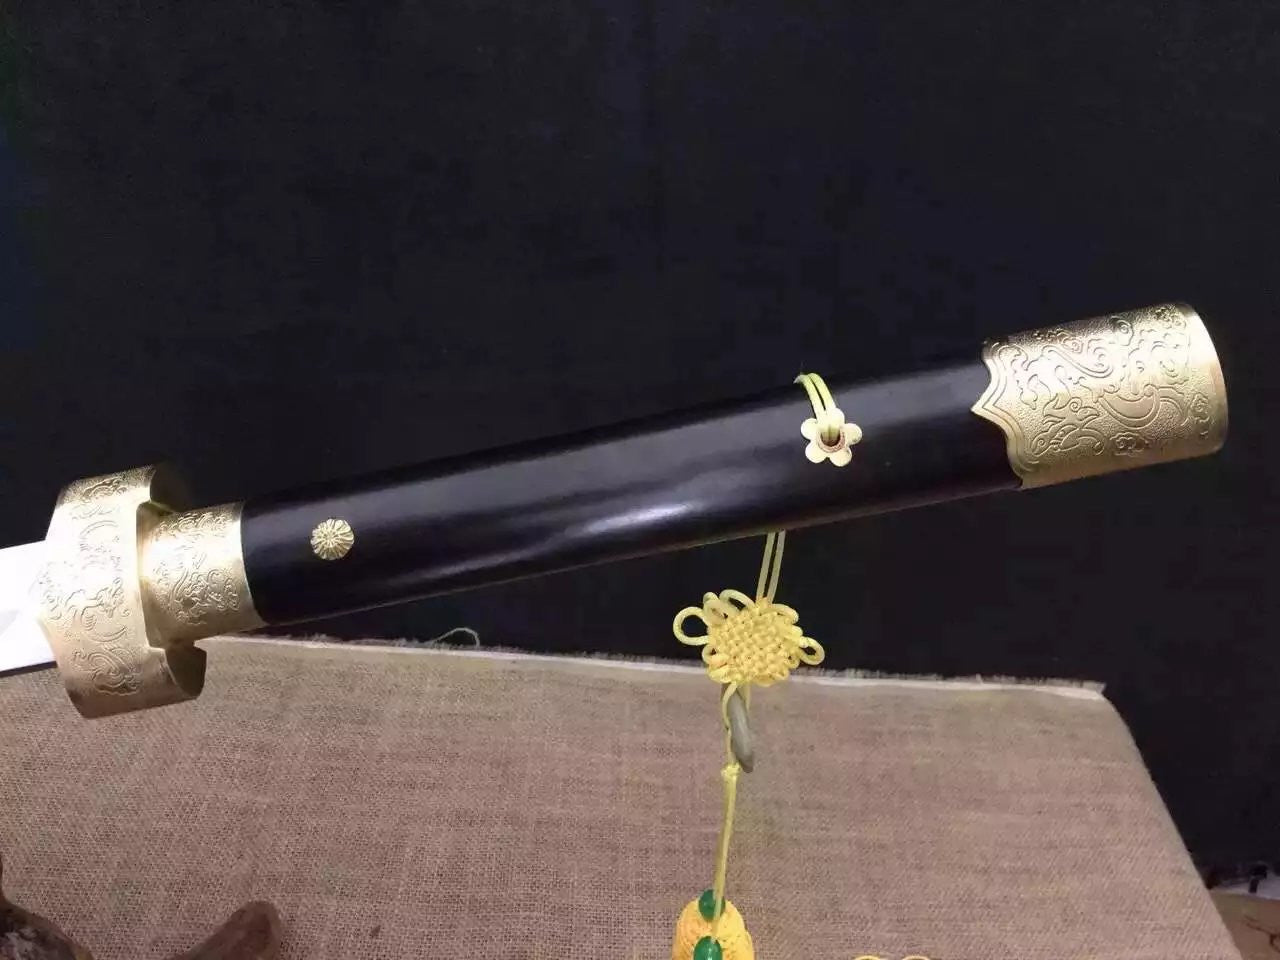 Zhizun sword,Folded steel,Ebony scabbard,Copper fitting,Length 47 inch - Chinese sword shop